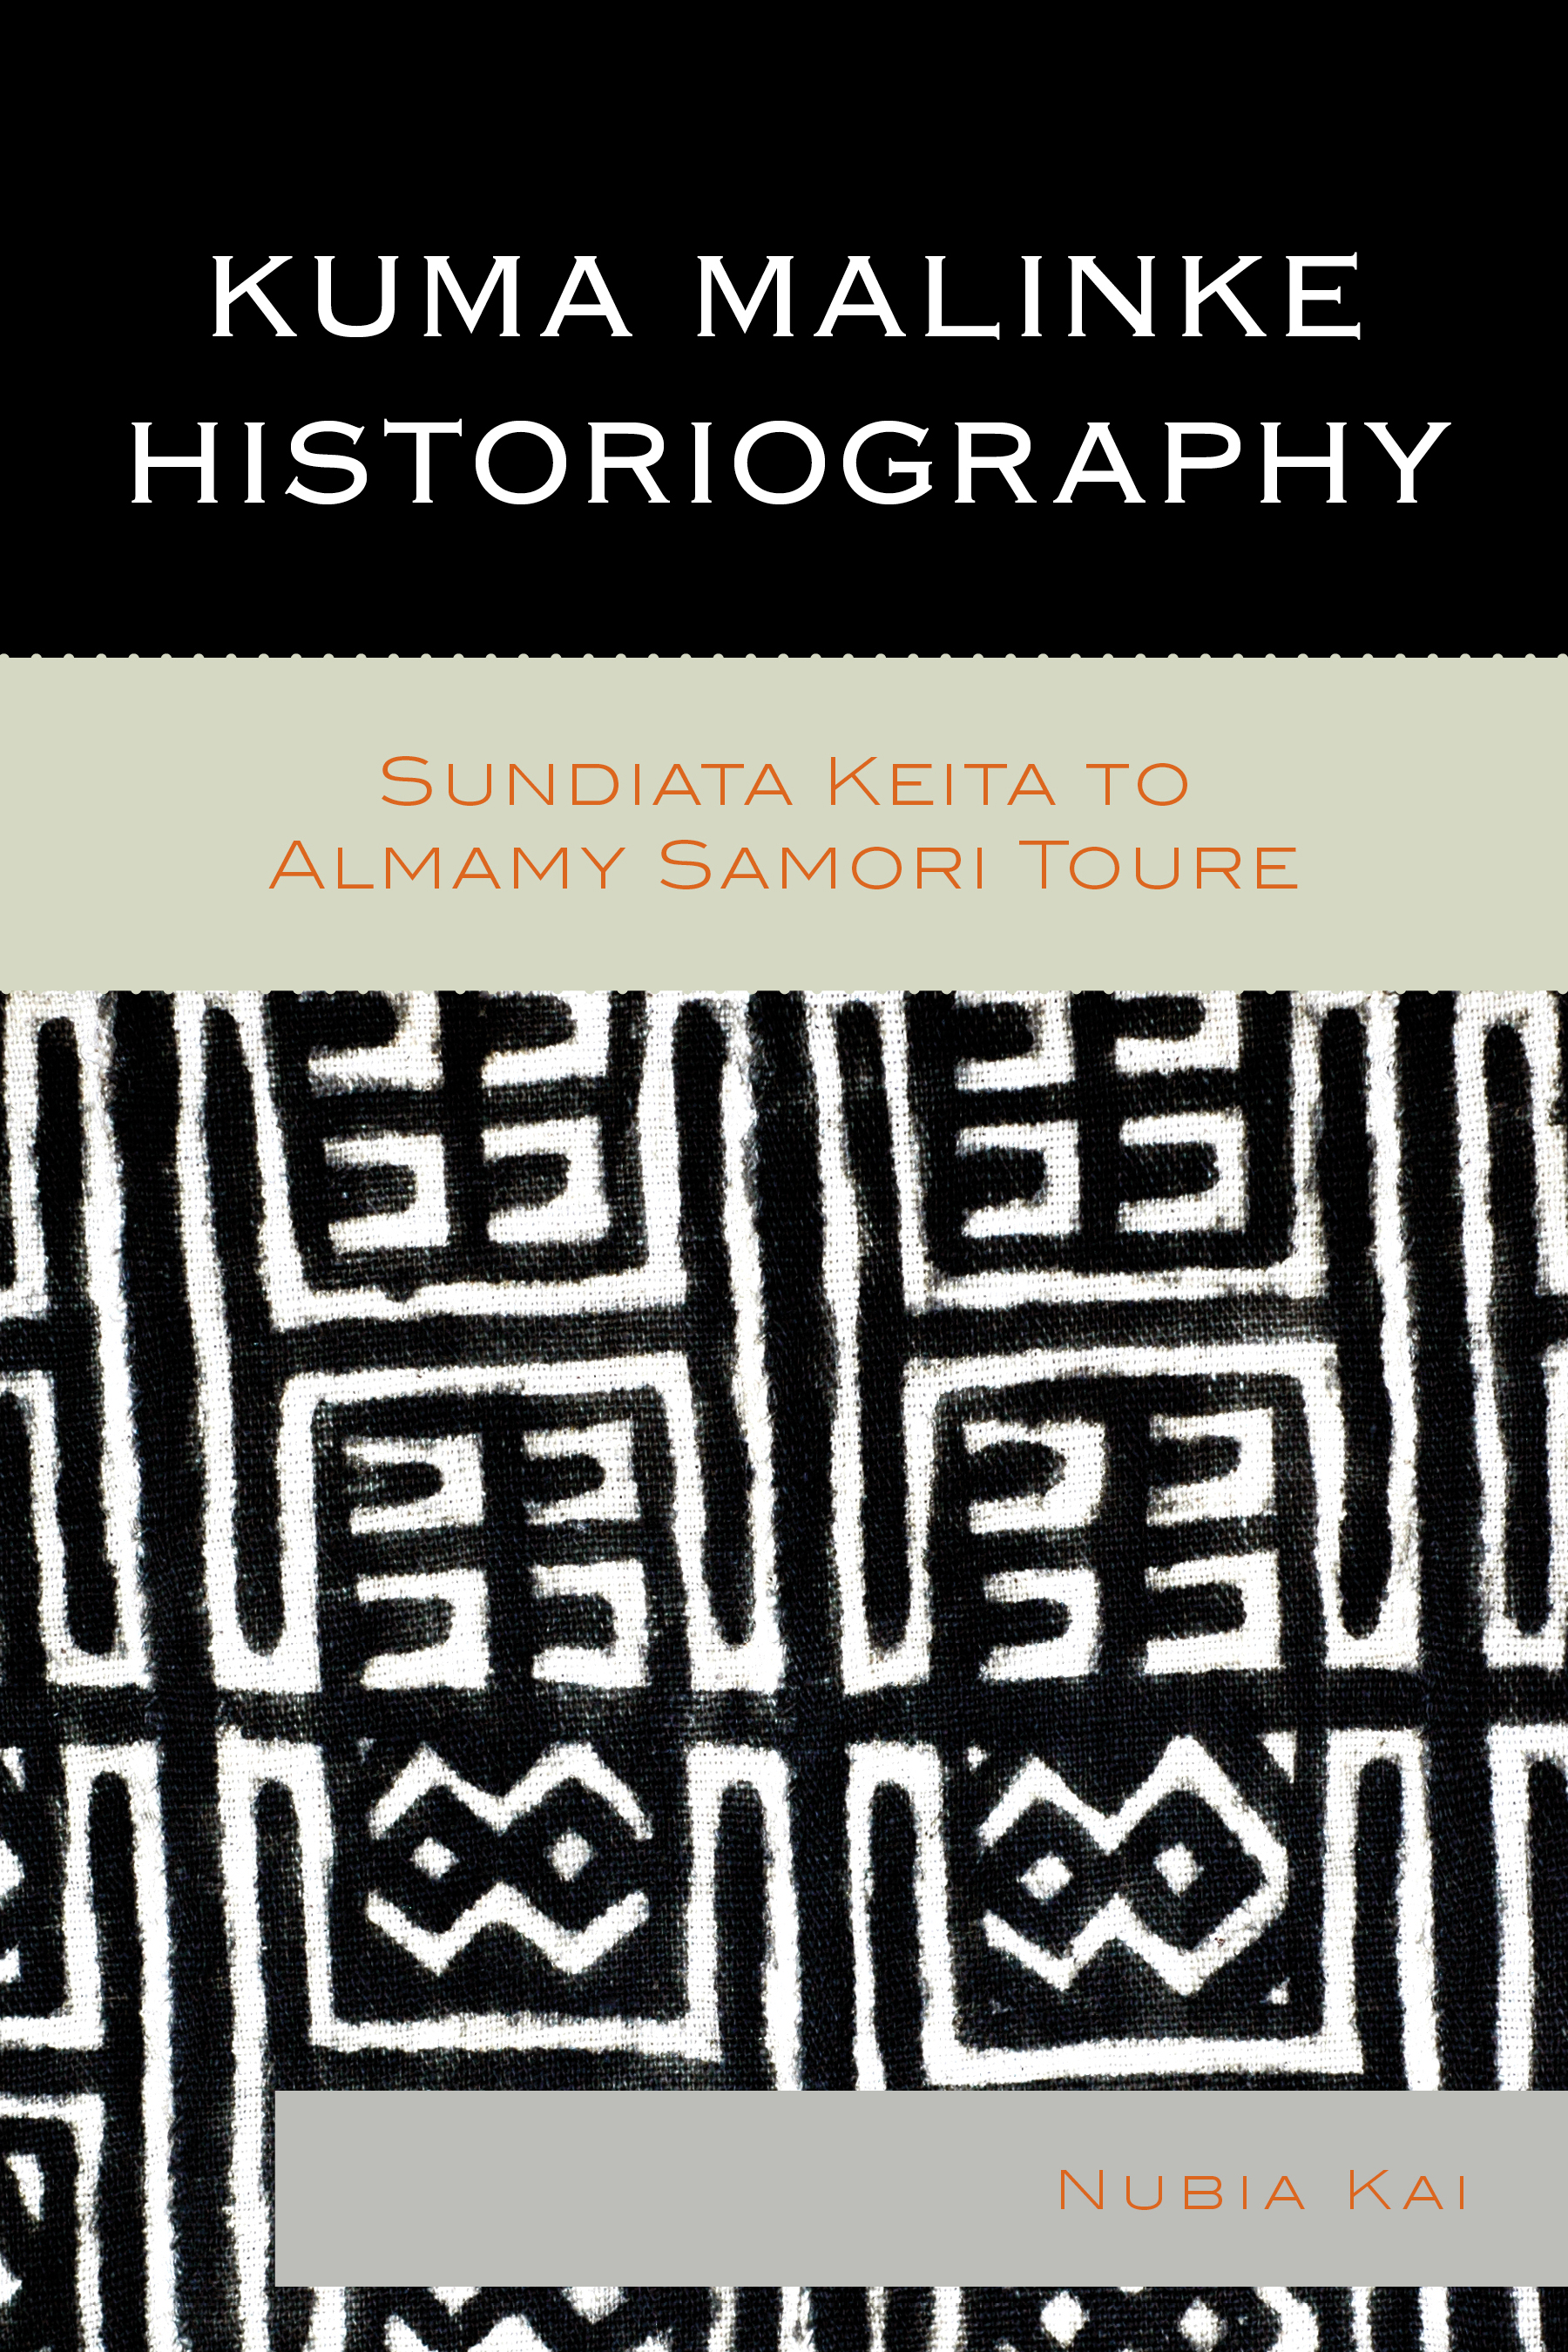 Kuma Malinke Historiography: Sundiata Keita to Almamy Samori Toure